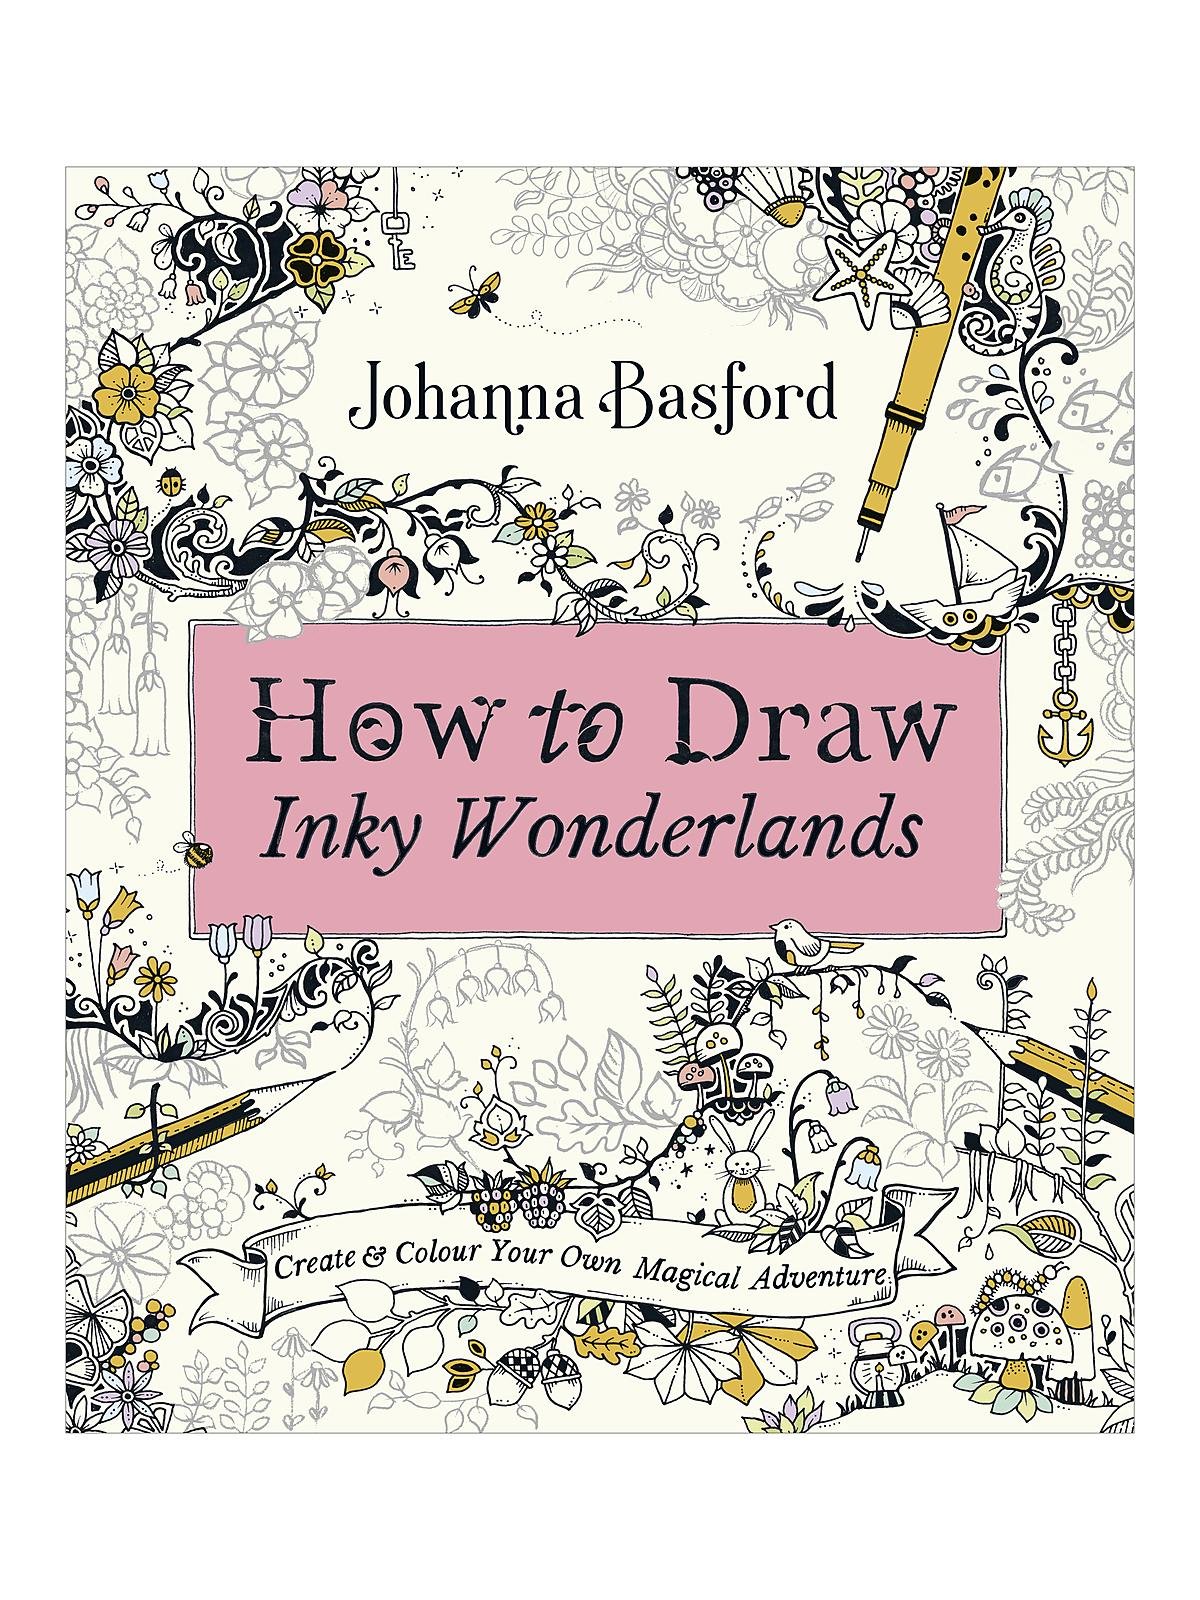 Penguin - How to Draw Inky Wonderlands